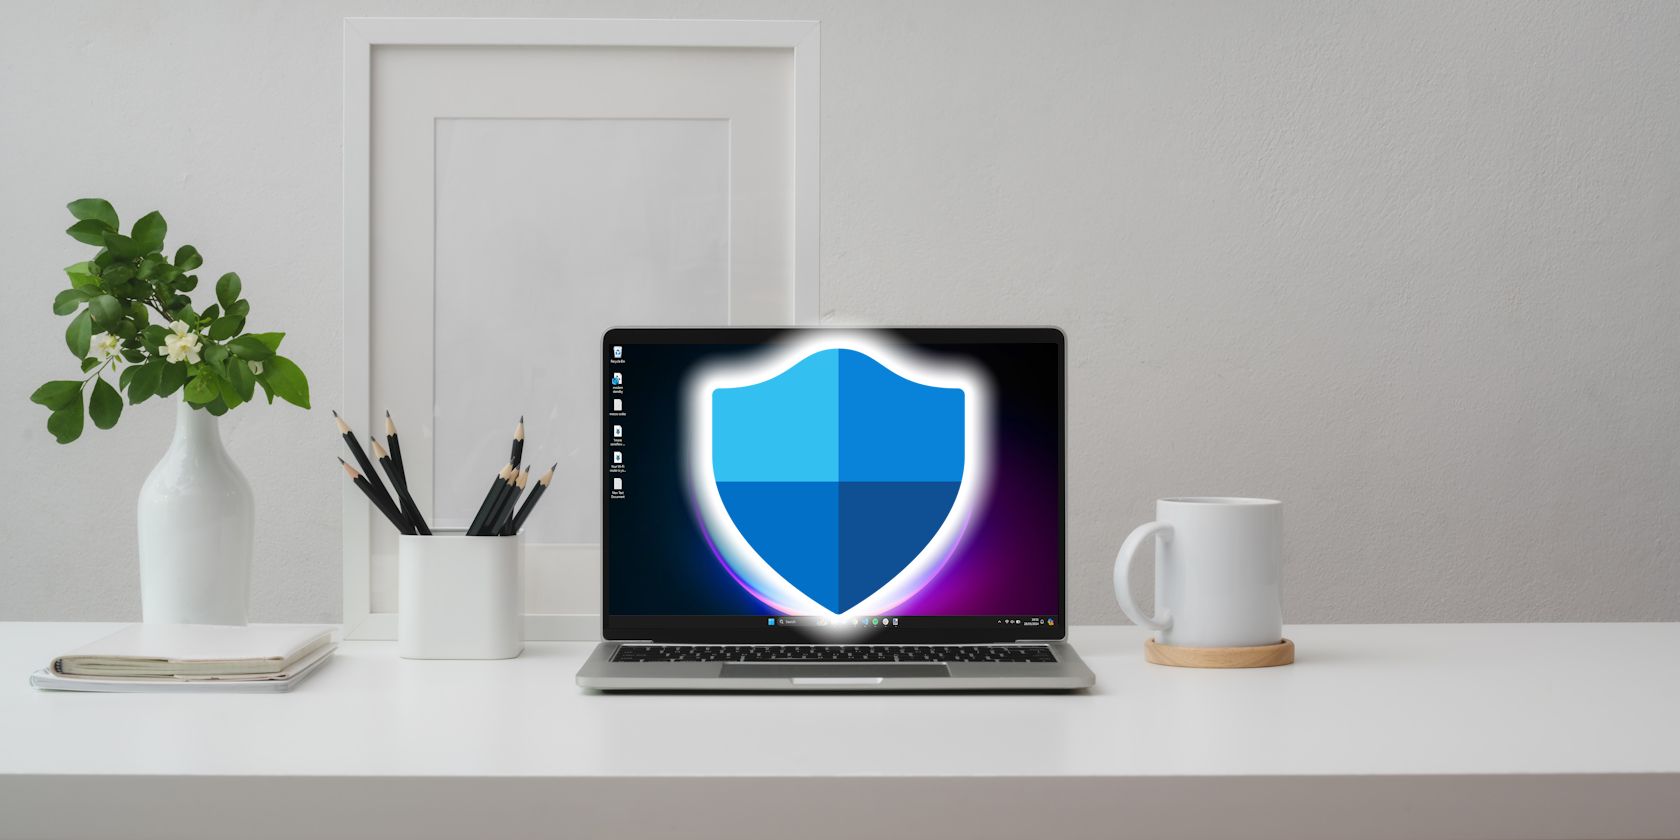 windows security logo on laptop screen